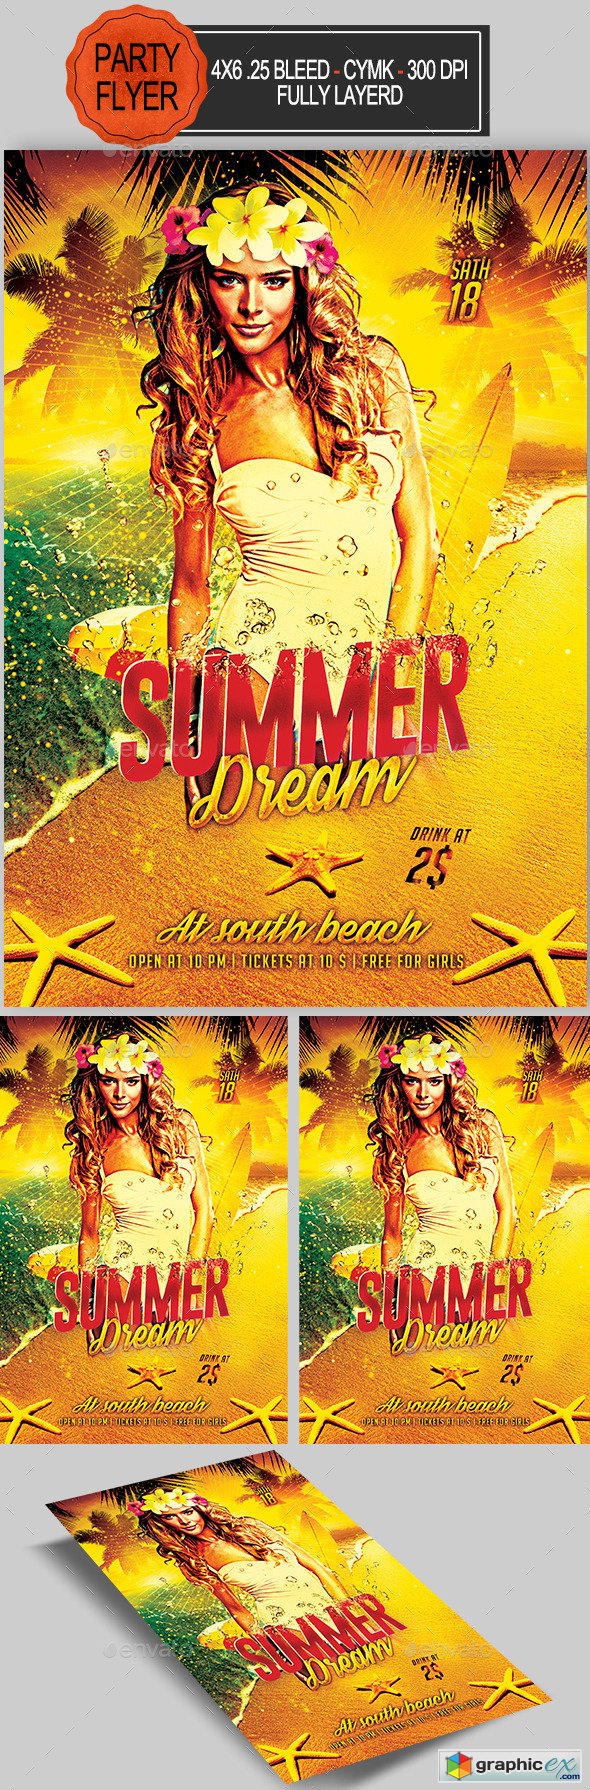 Summer Dream Party Flyer